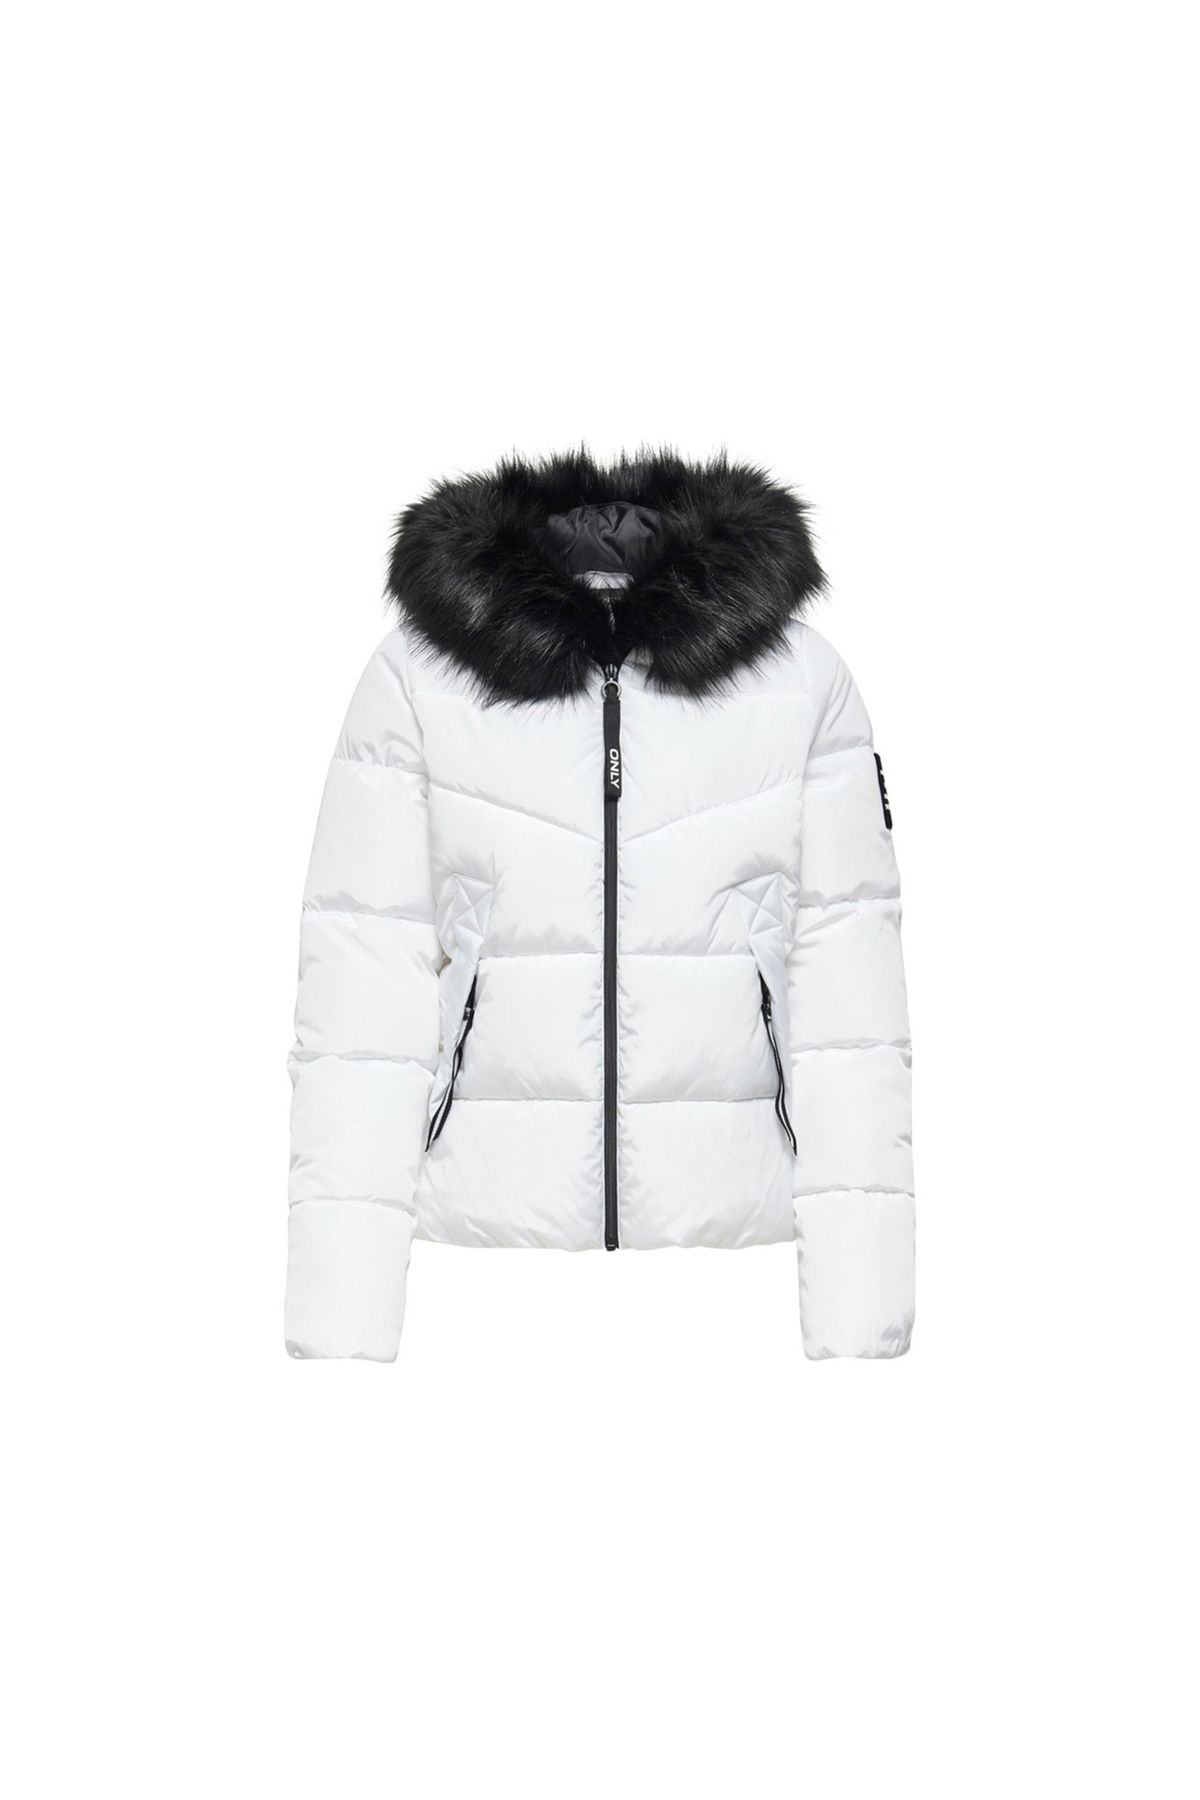 Only Onlmonica Short Puffer Jacket Kadın Günlük Mont 15205638 Brıght Whıte Beyaz